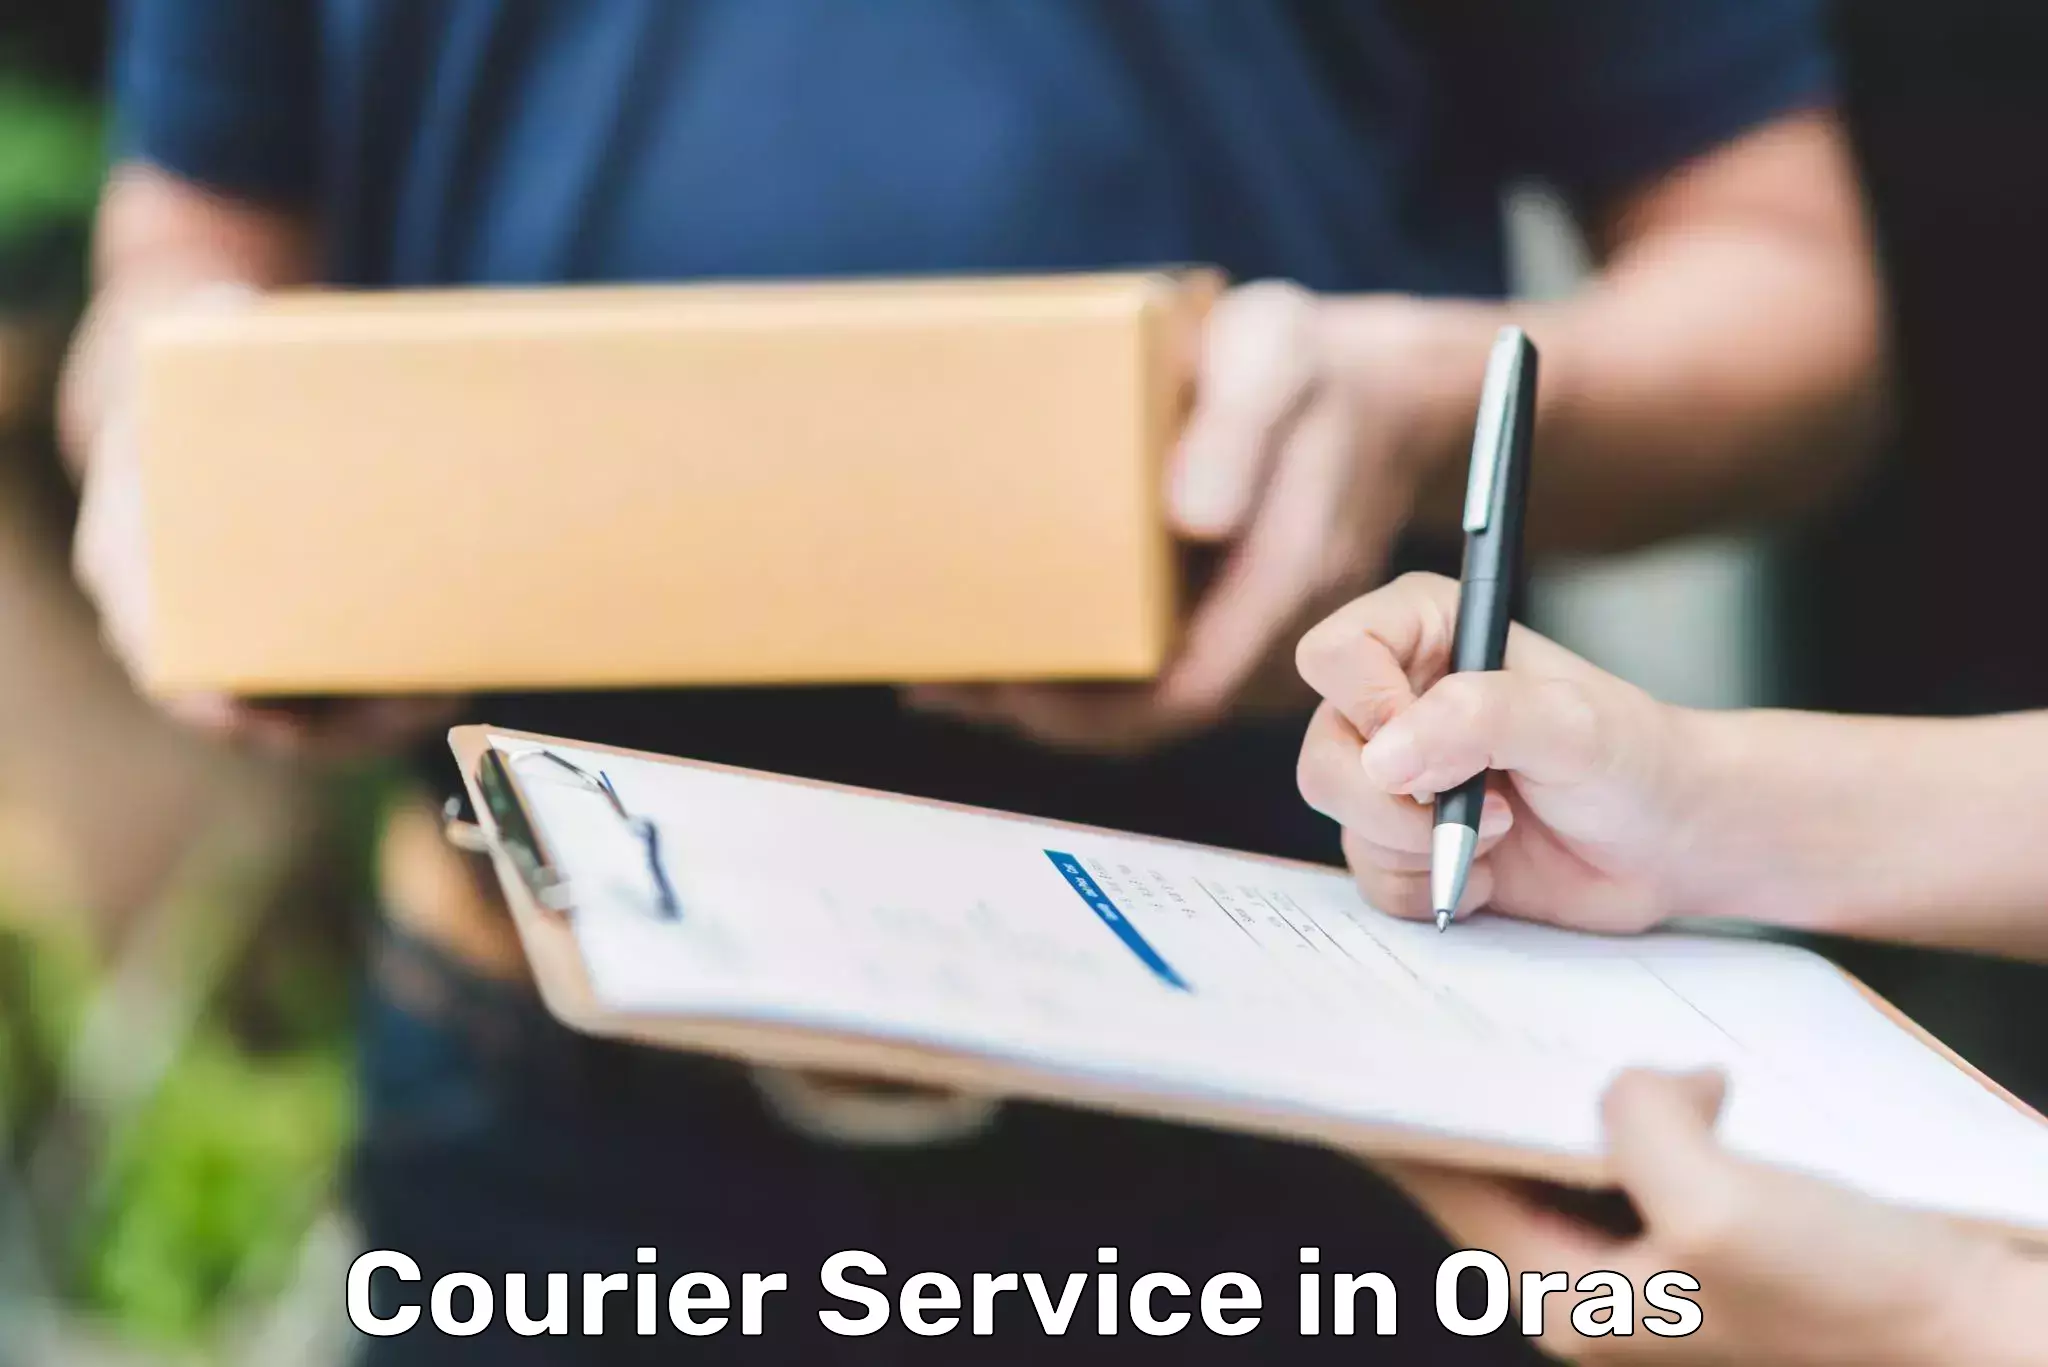 Speedy delivery service in Oras